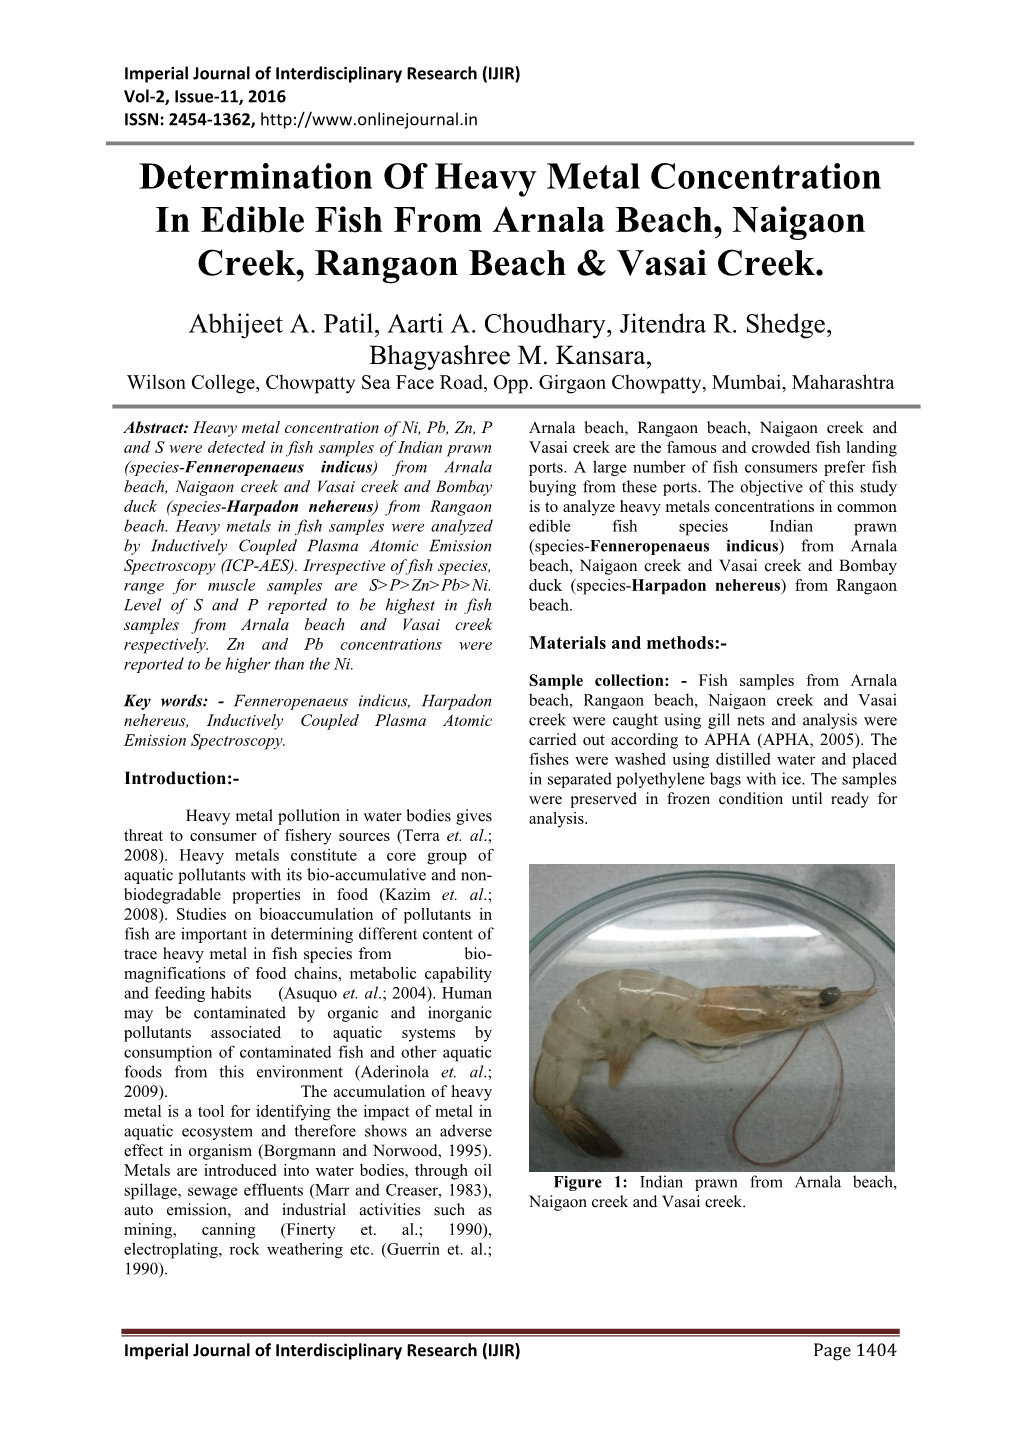 Determination of Heavy Metal Concentration in Edible Fish from Arnala Beach, Naigaon Creek, Rangaon Beach & Vasai Creek